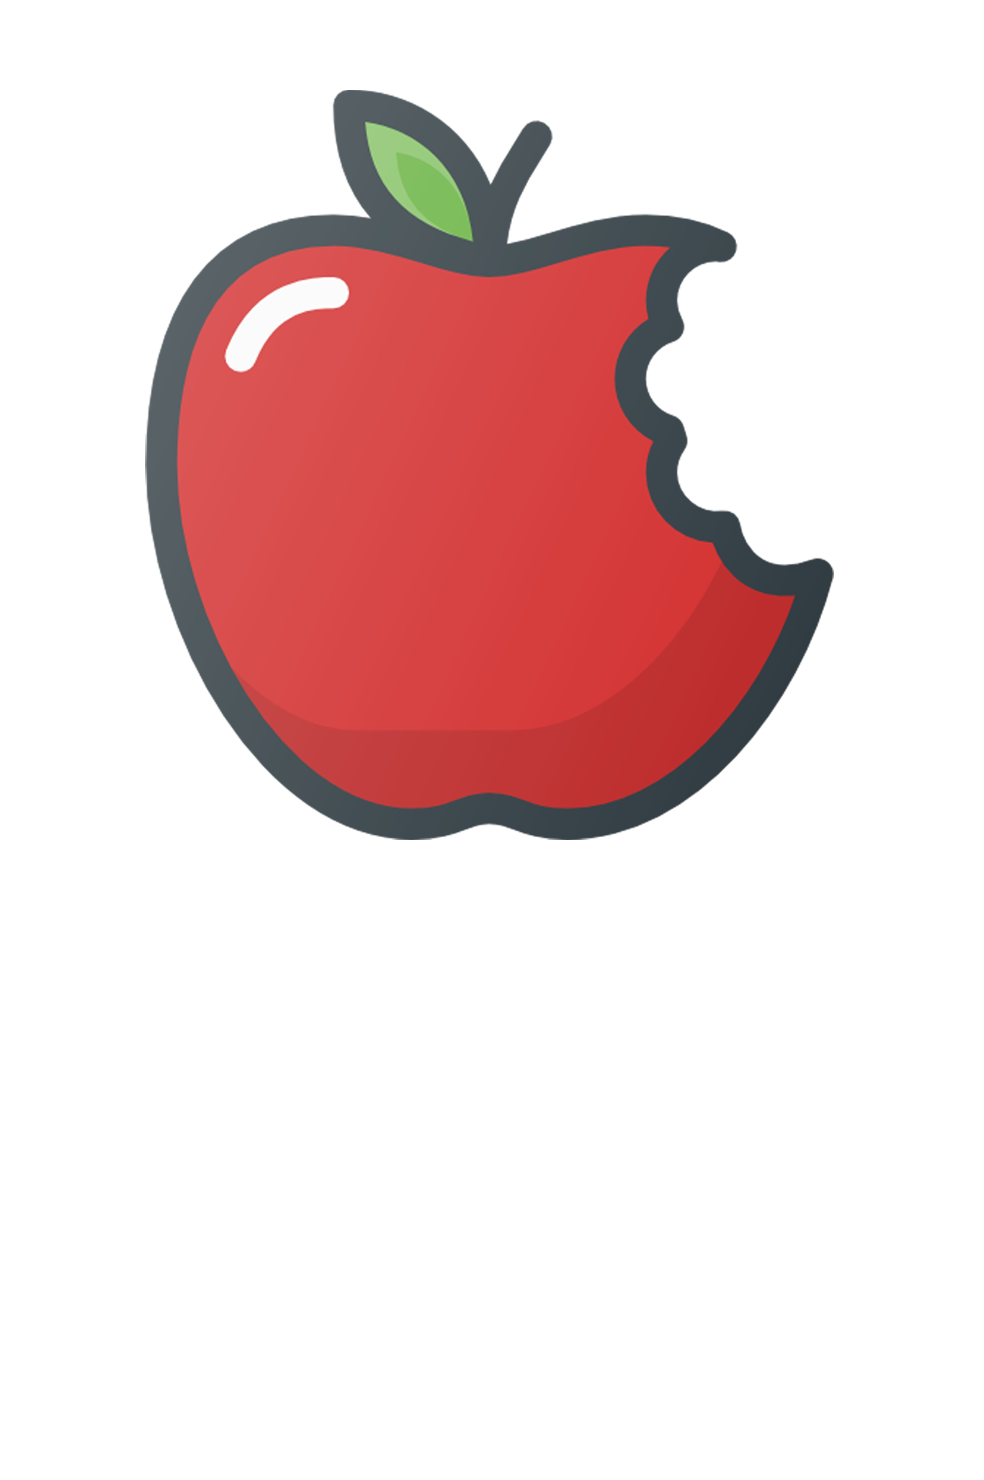 Mini-Lessons